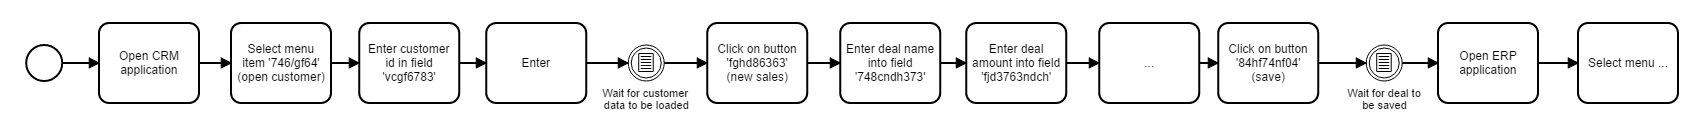 An RPA Task Modeled Using BPMN